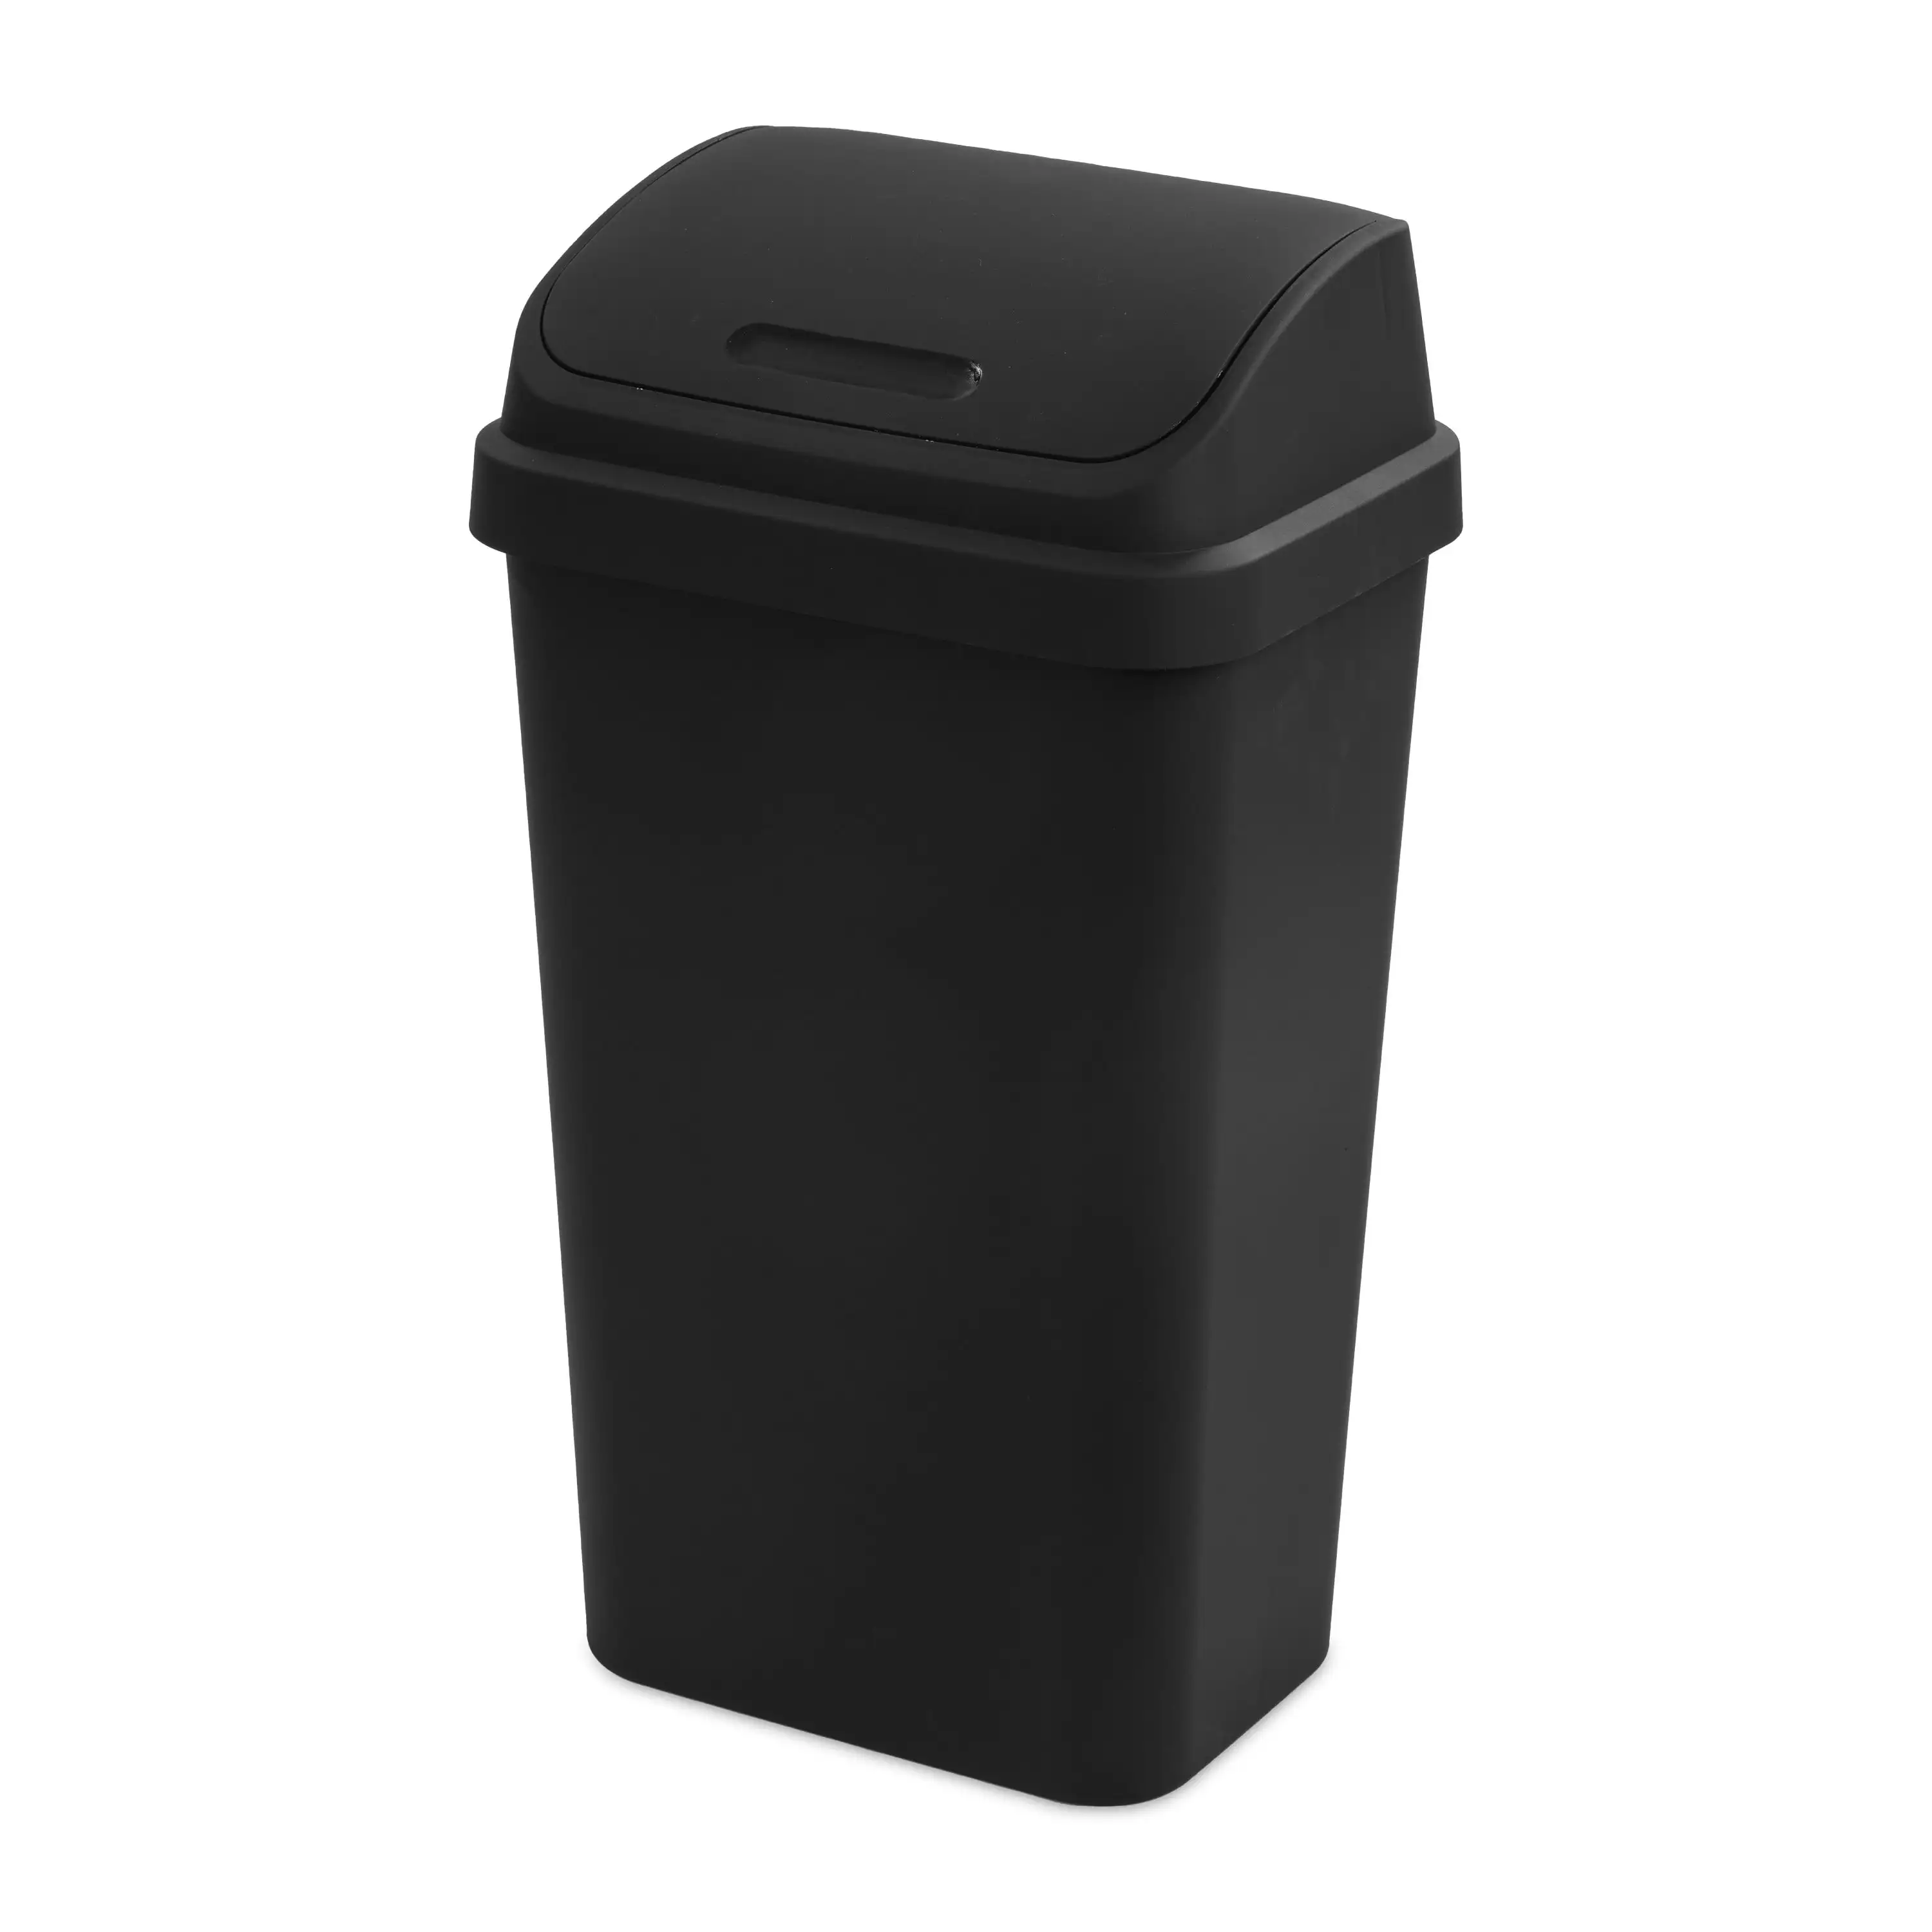 Sterilite 13 Gallon Trash Can, Plastic Swing Top Kitchen Trash Can, Black sheds for storage